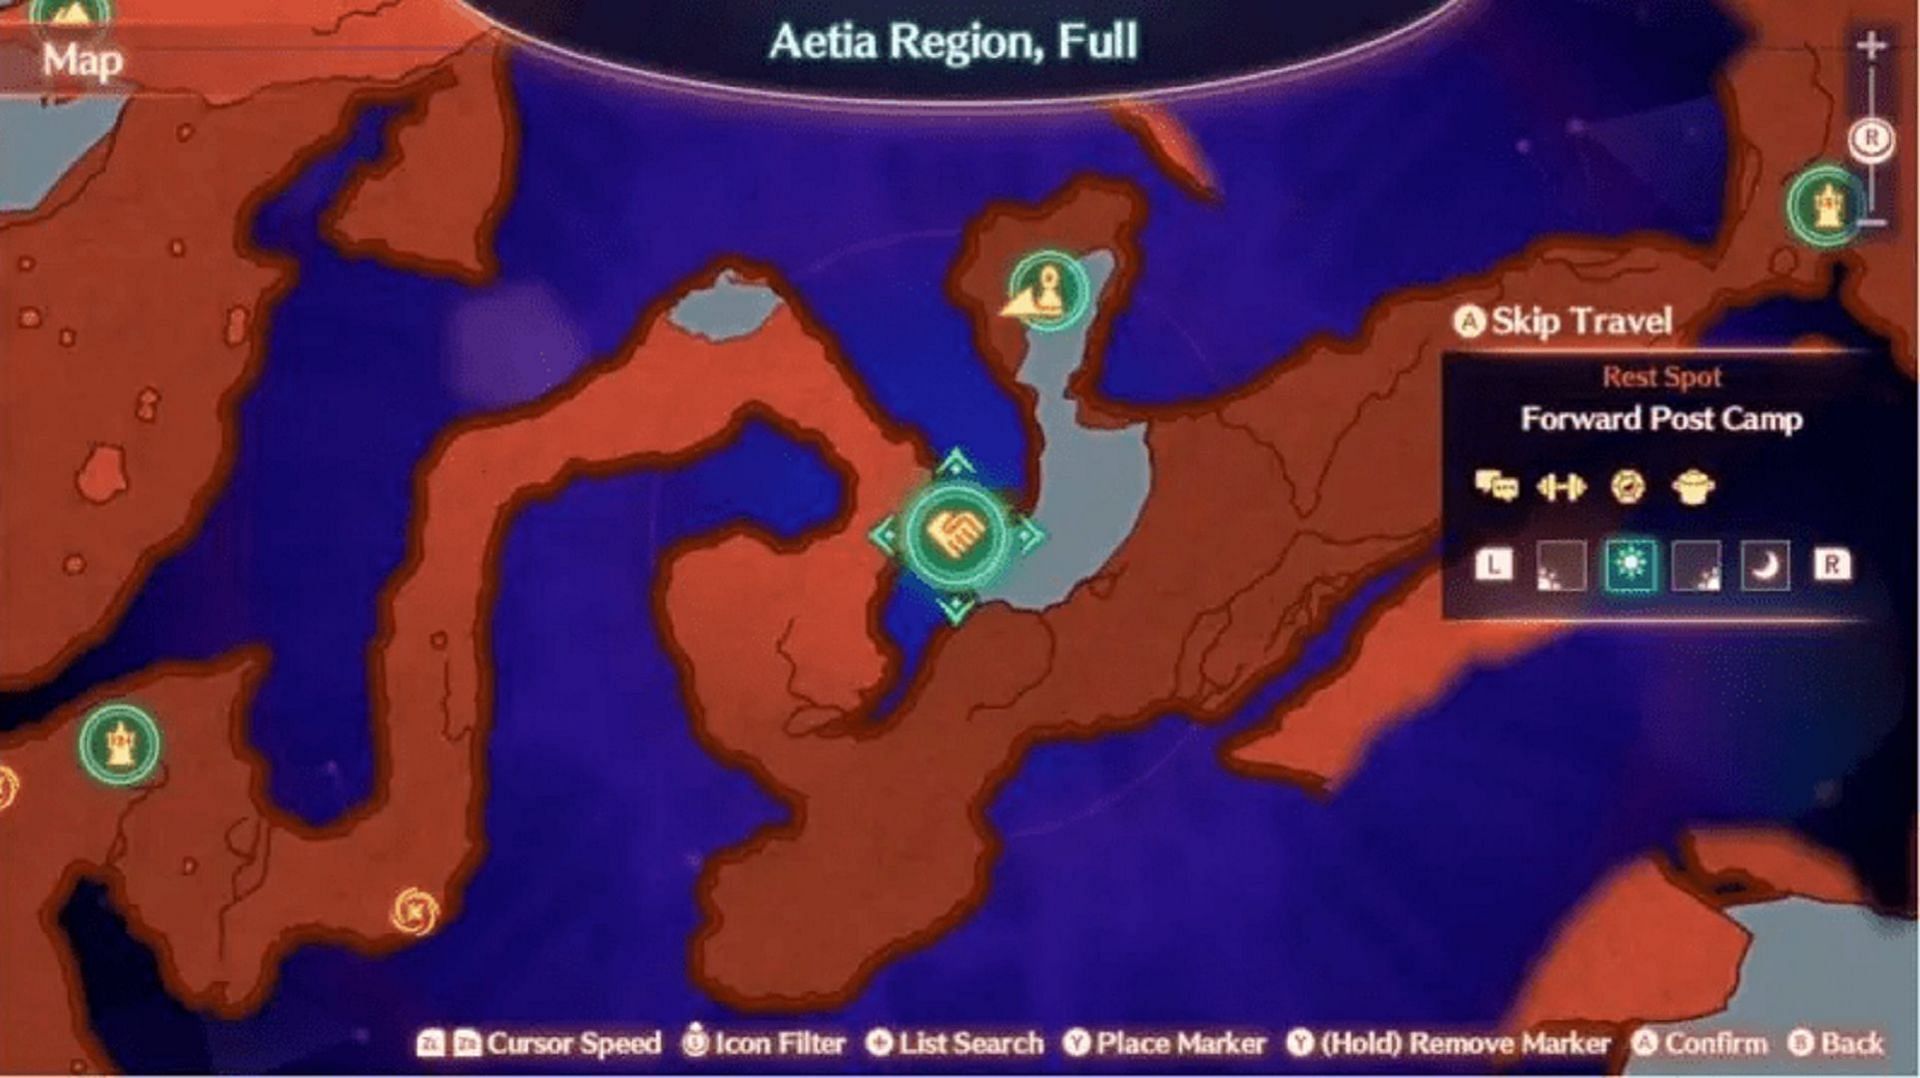 The Forward Post Camp of the Aetia Region in Xenoblade Chronicles 3 (Image via Nintendo)